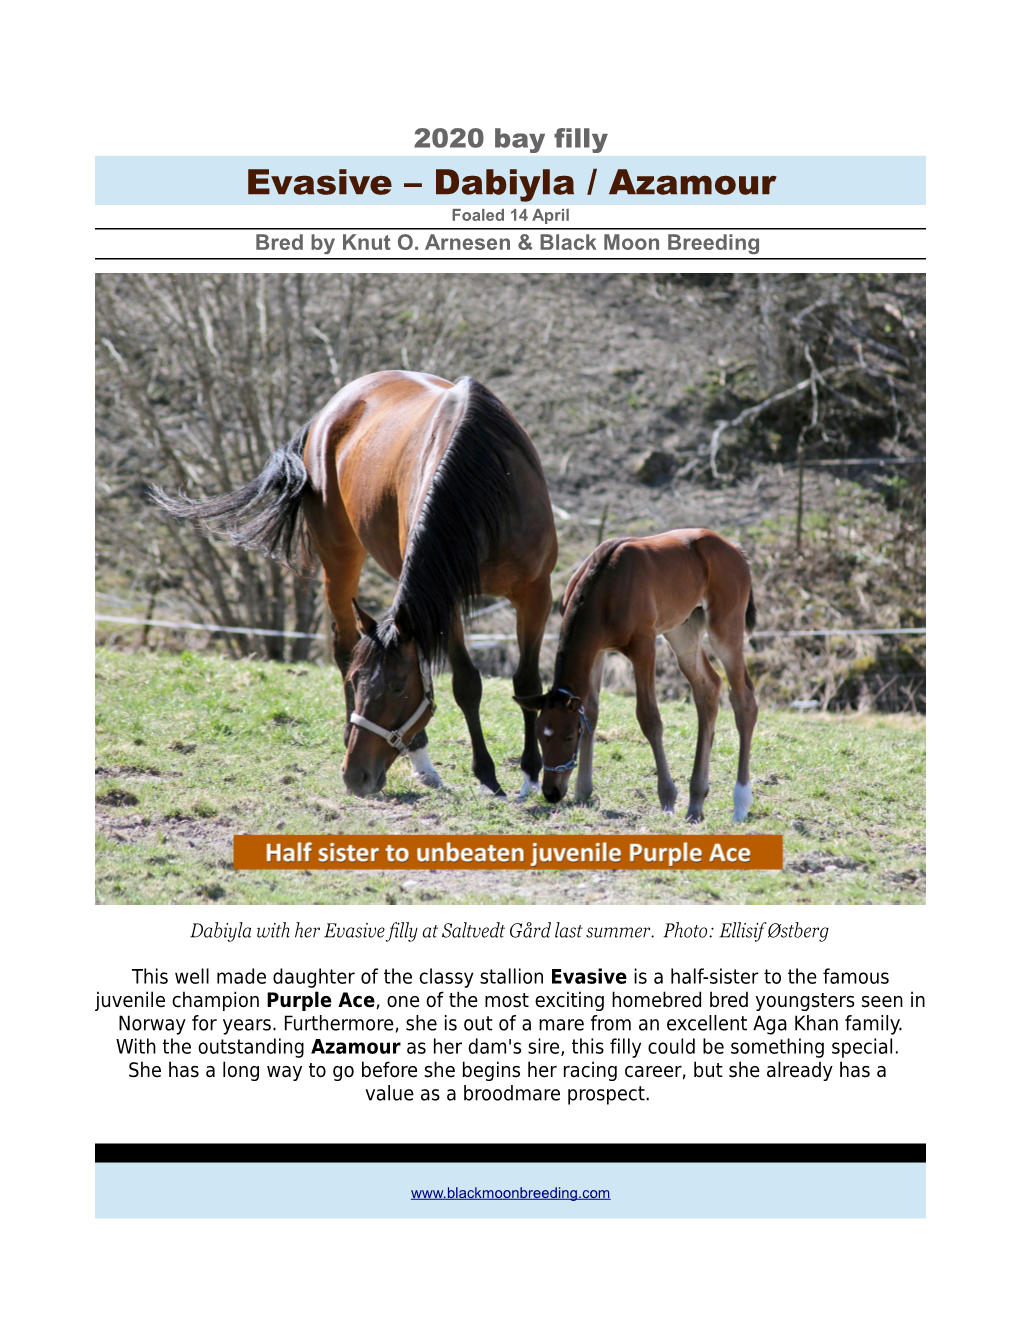 Dabiyla / Azamour Foaled 14 April Bred by Knut O